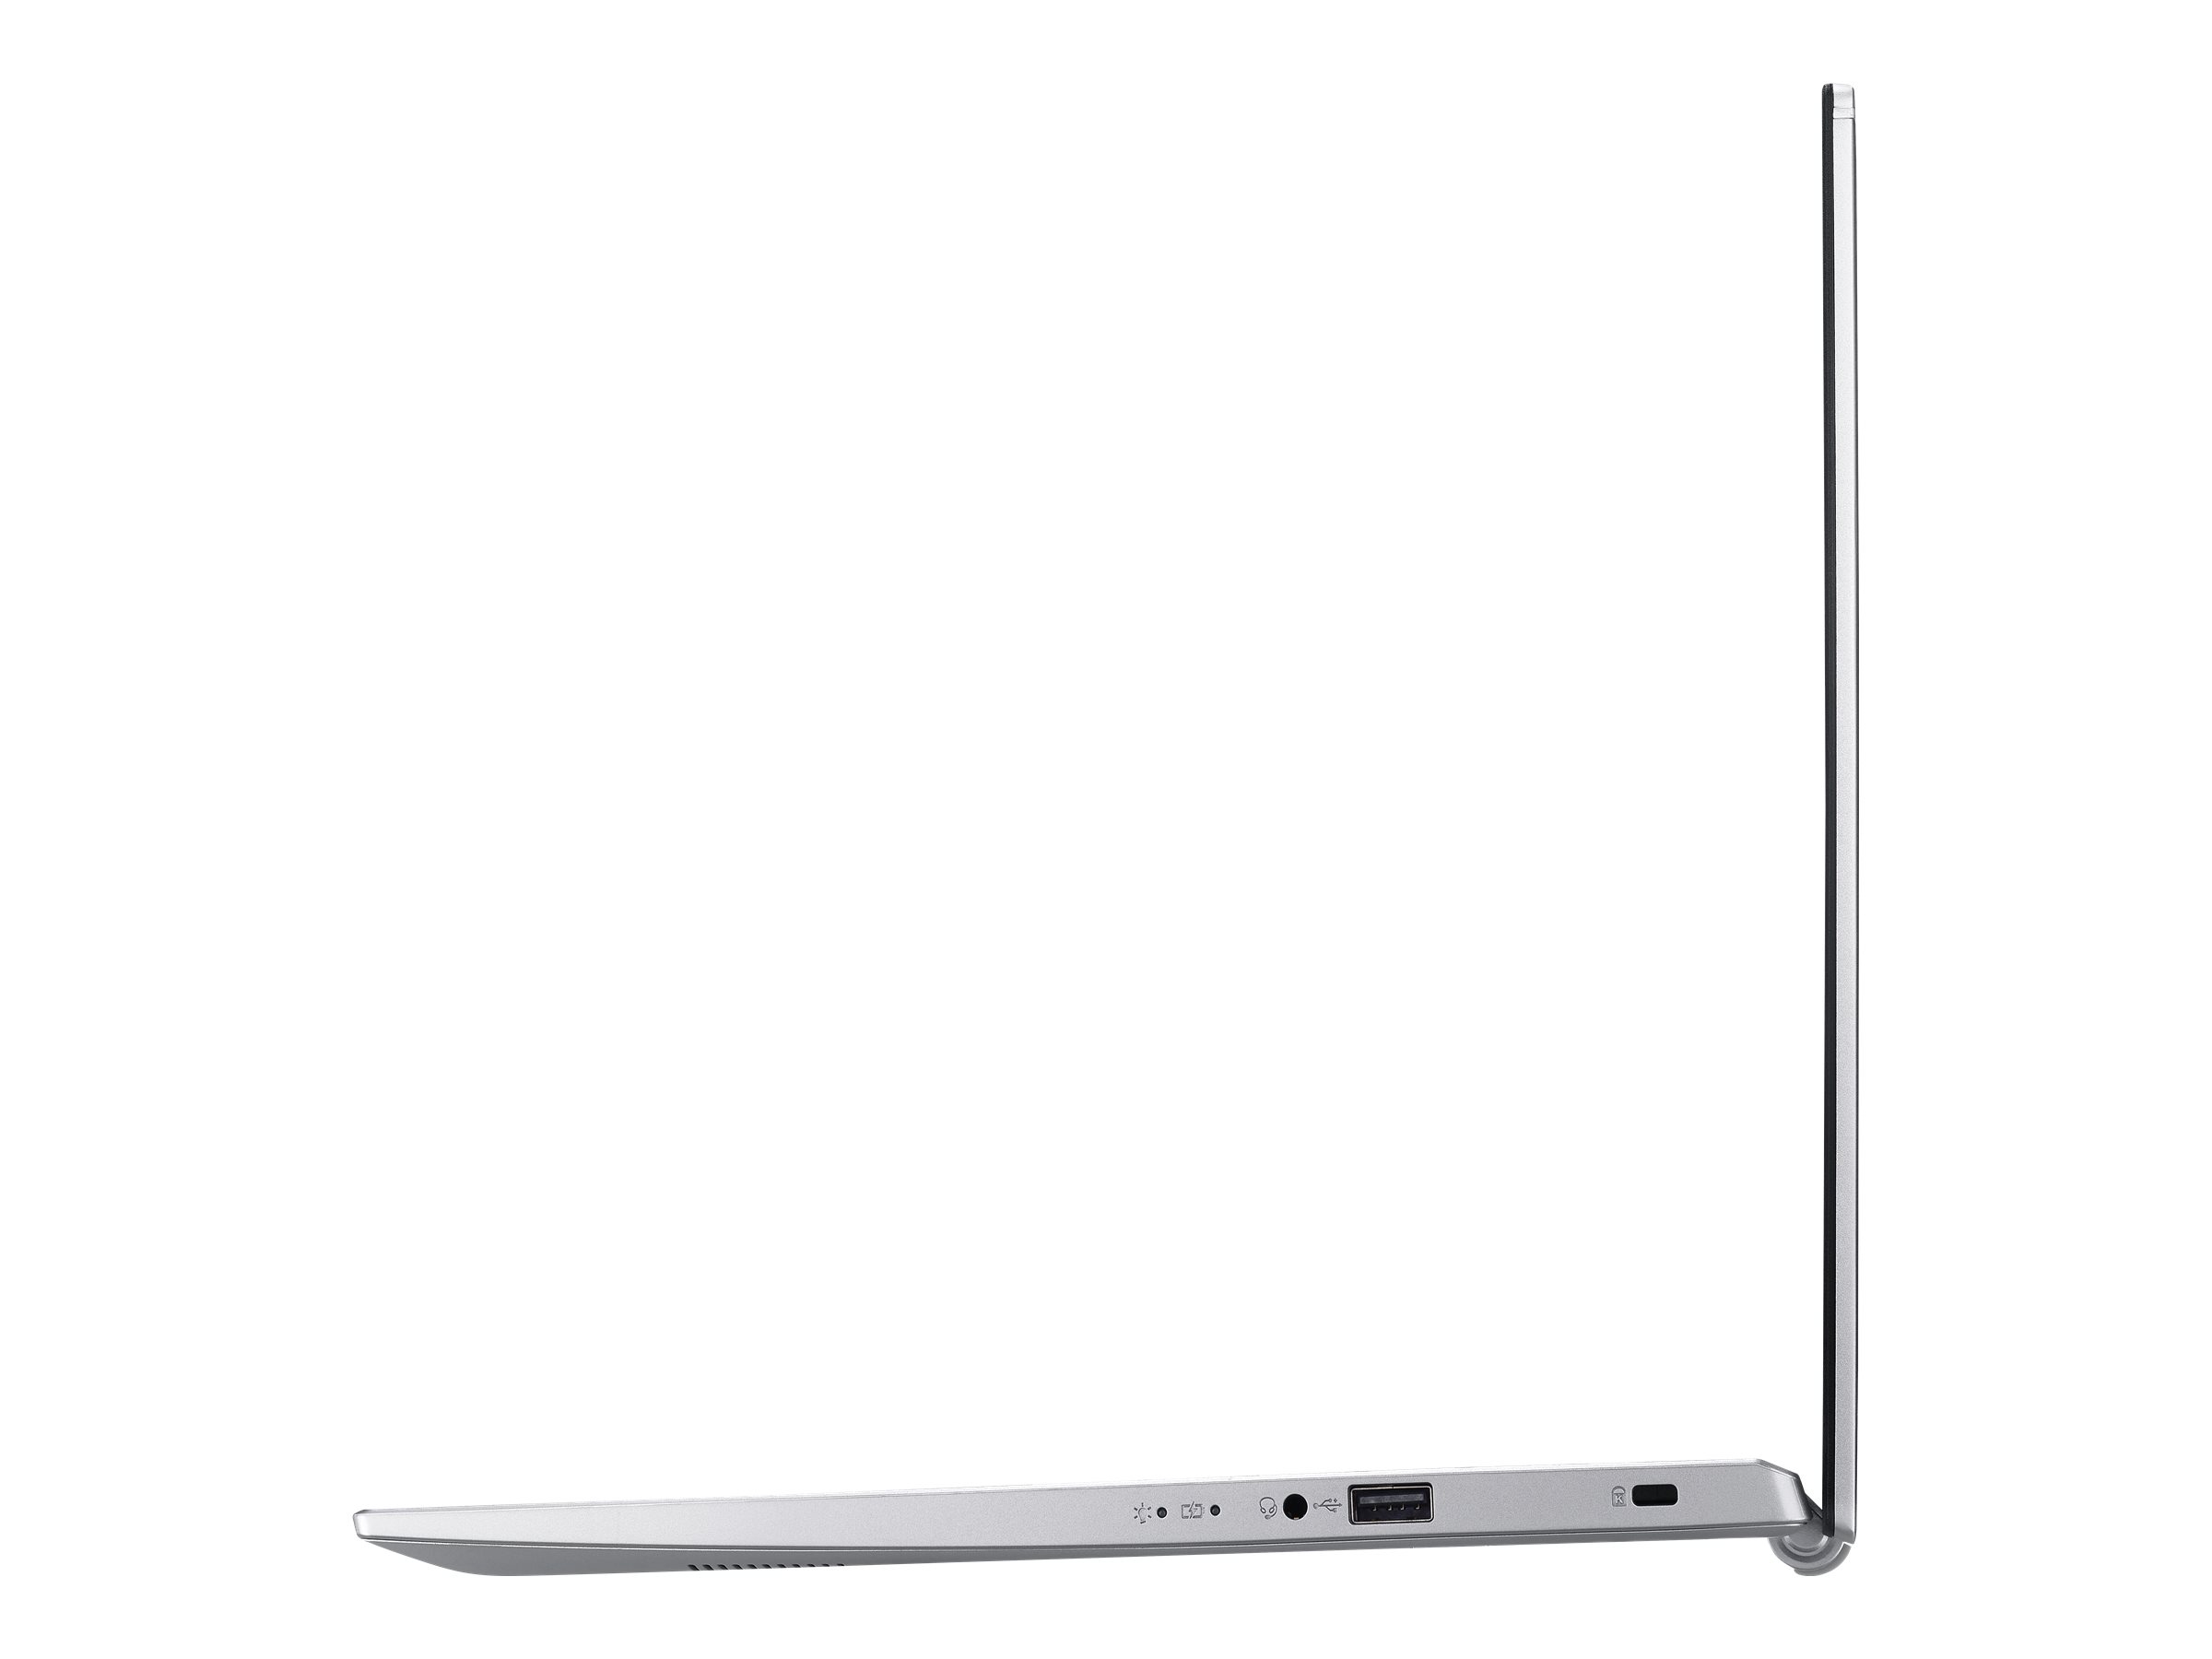 Acer Aspire 5 A515-56-36UT Slim Laptop | 15.6" Full HD Display | 11th Gen Intel Core i3-1115G4 Processor | 4GB DDR4 | 128GB NVMe SSD | WiFi 6 | Amazon Alexa | Windows 10 Home (S Mode) - image 8 of 8